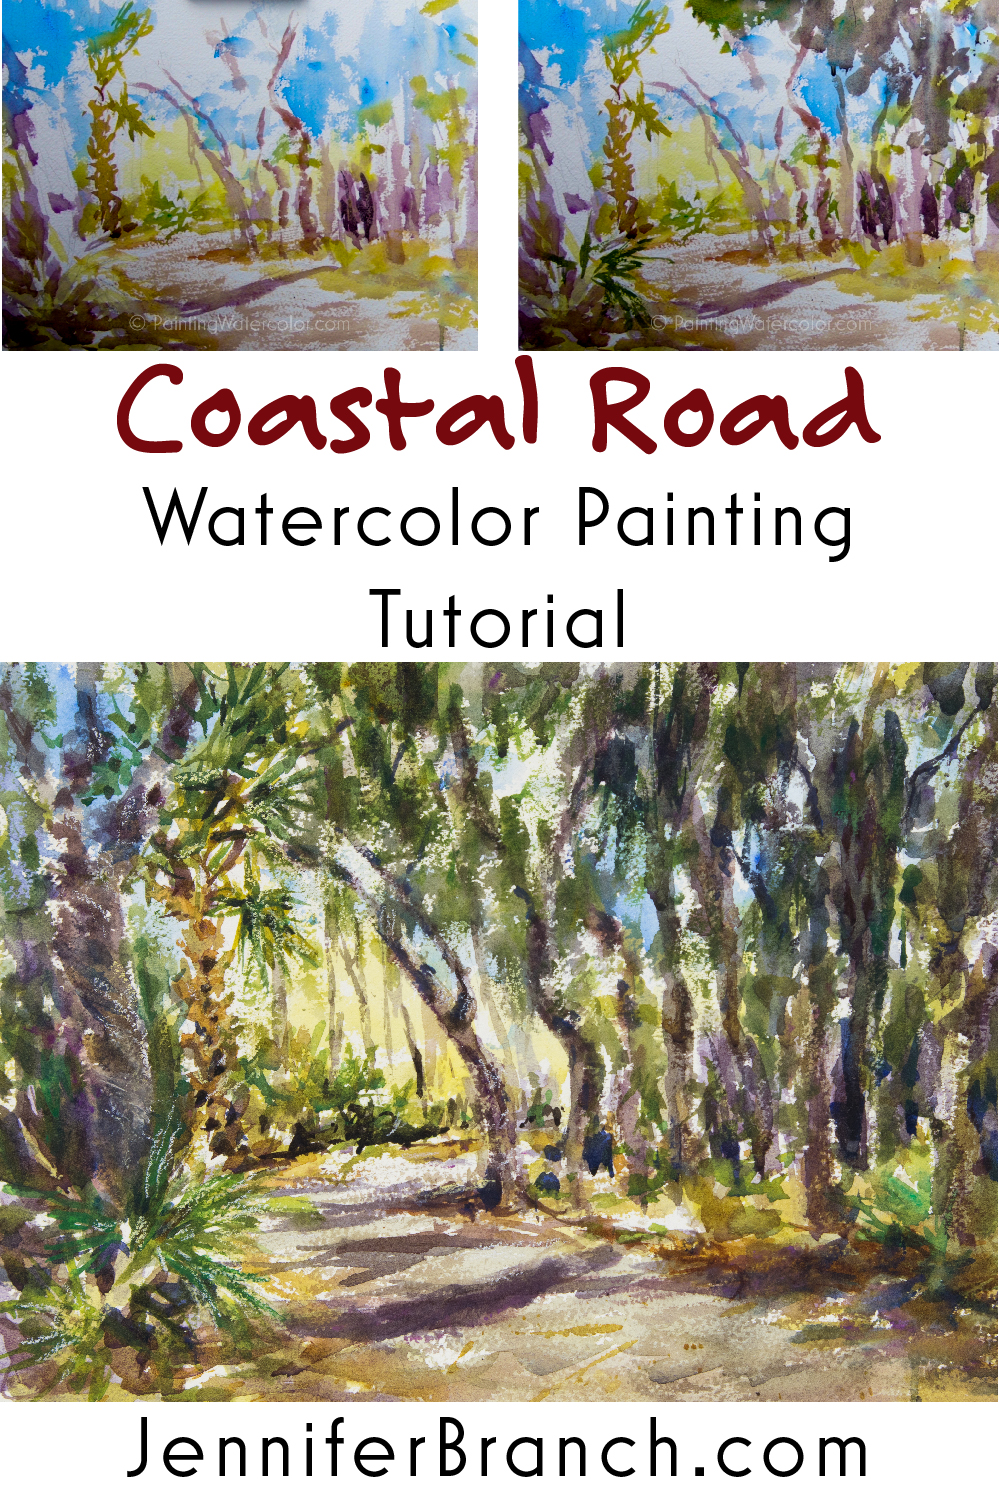 Coastal Road Sketch watercolor painting tutorial by Jennifer Branch